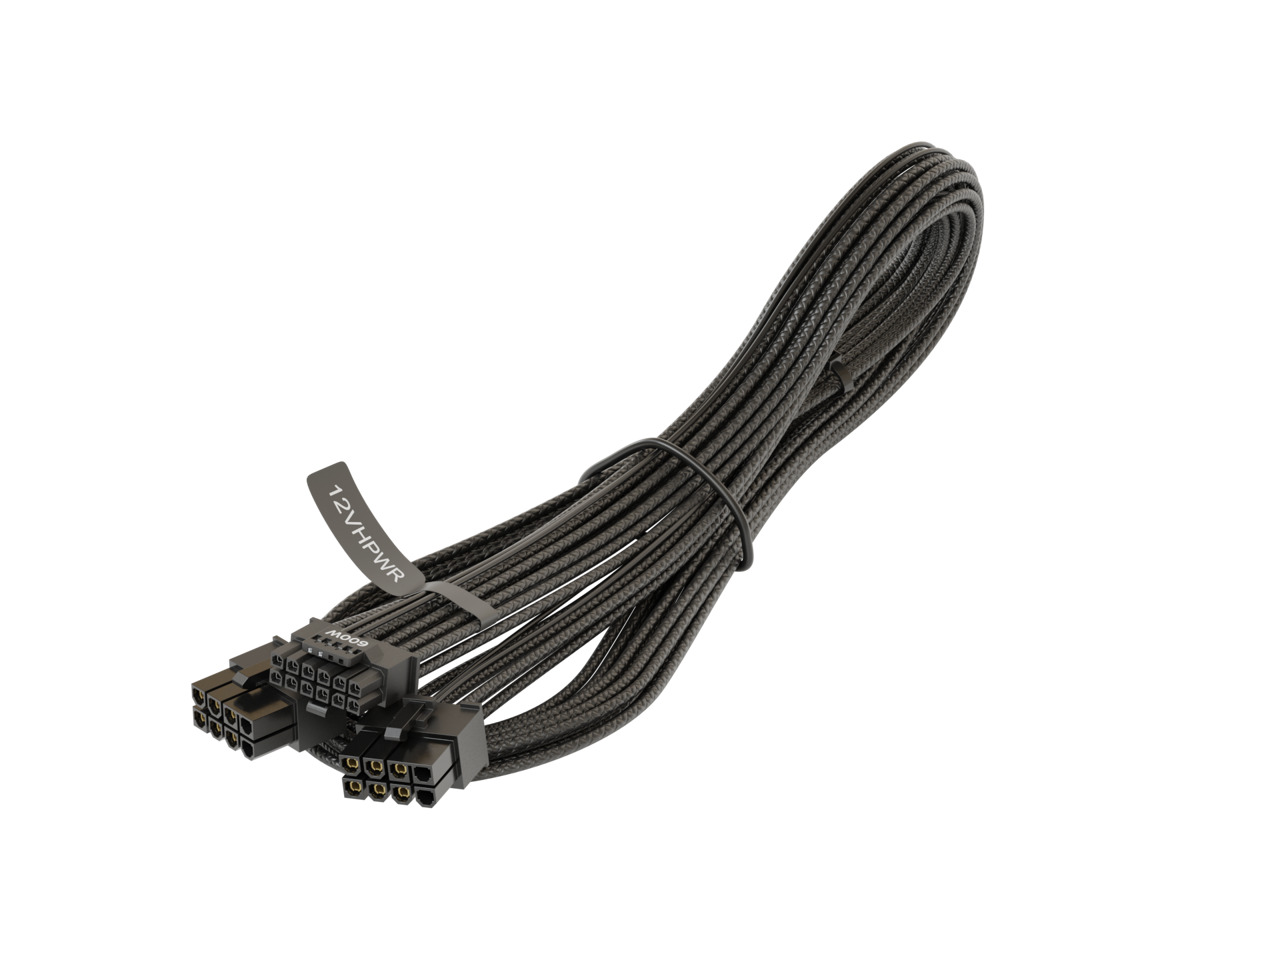 SeaSonic 750mm GPU (12VHPWR) - PSU (2x8-pin) Power Cable